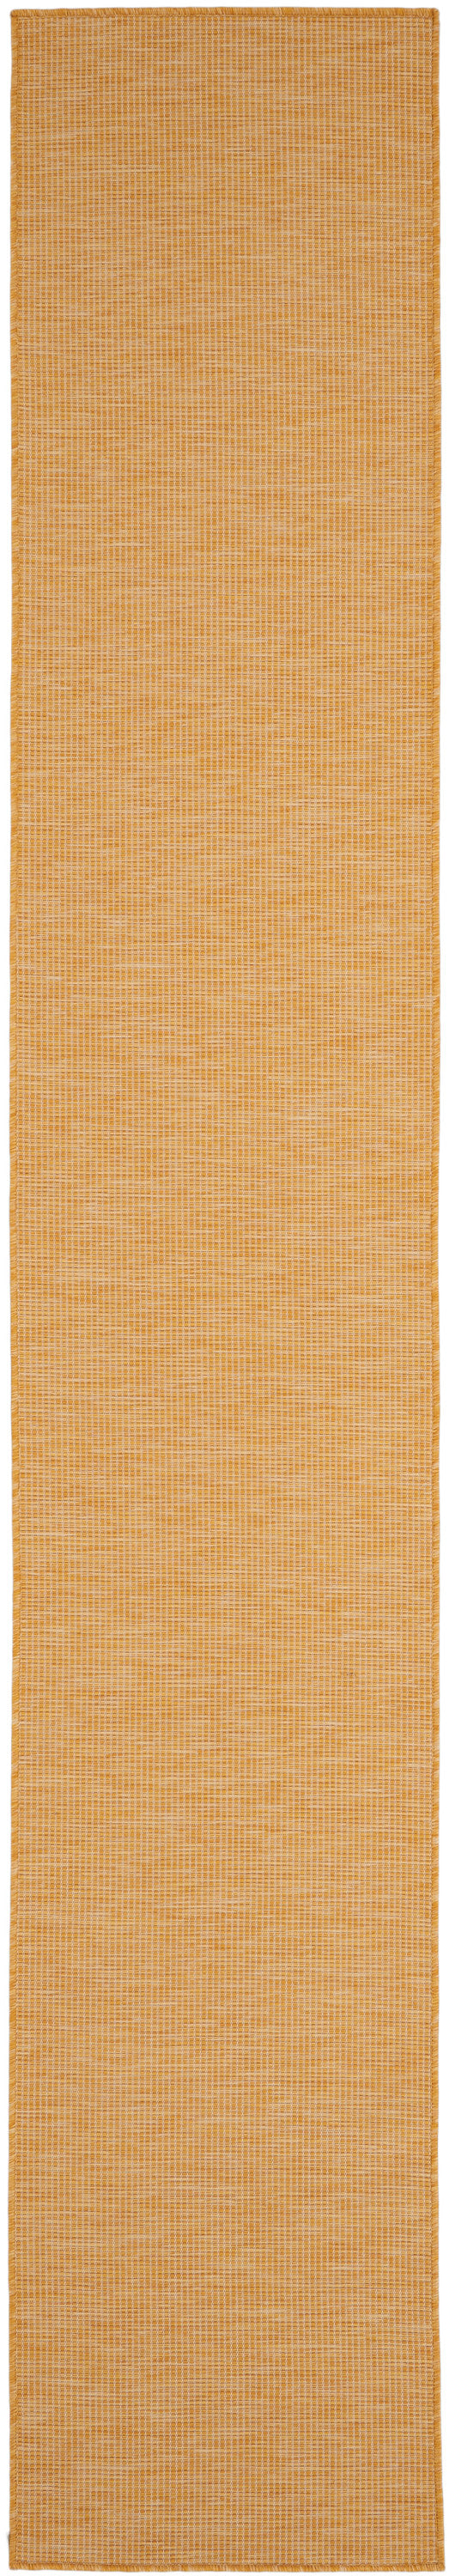 media image for positano yellow rug by nourison 99446842442 redo 3 280